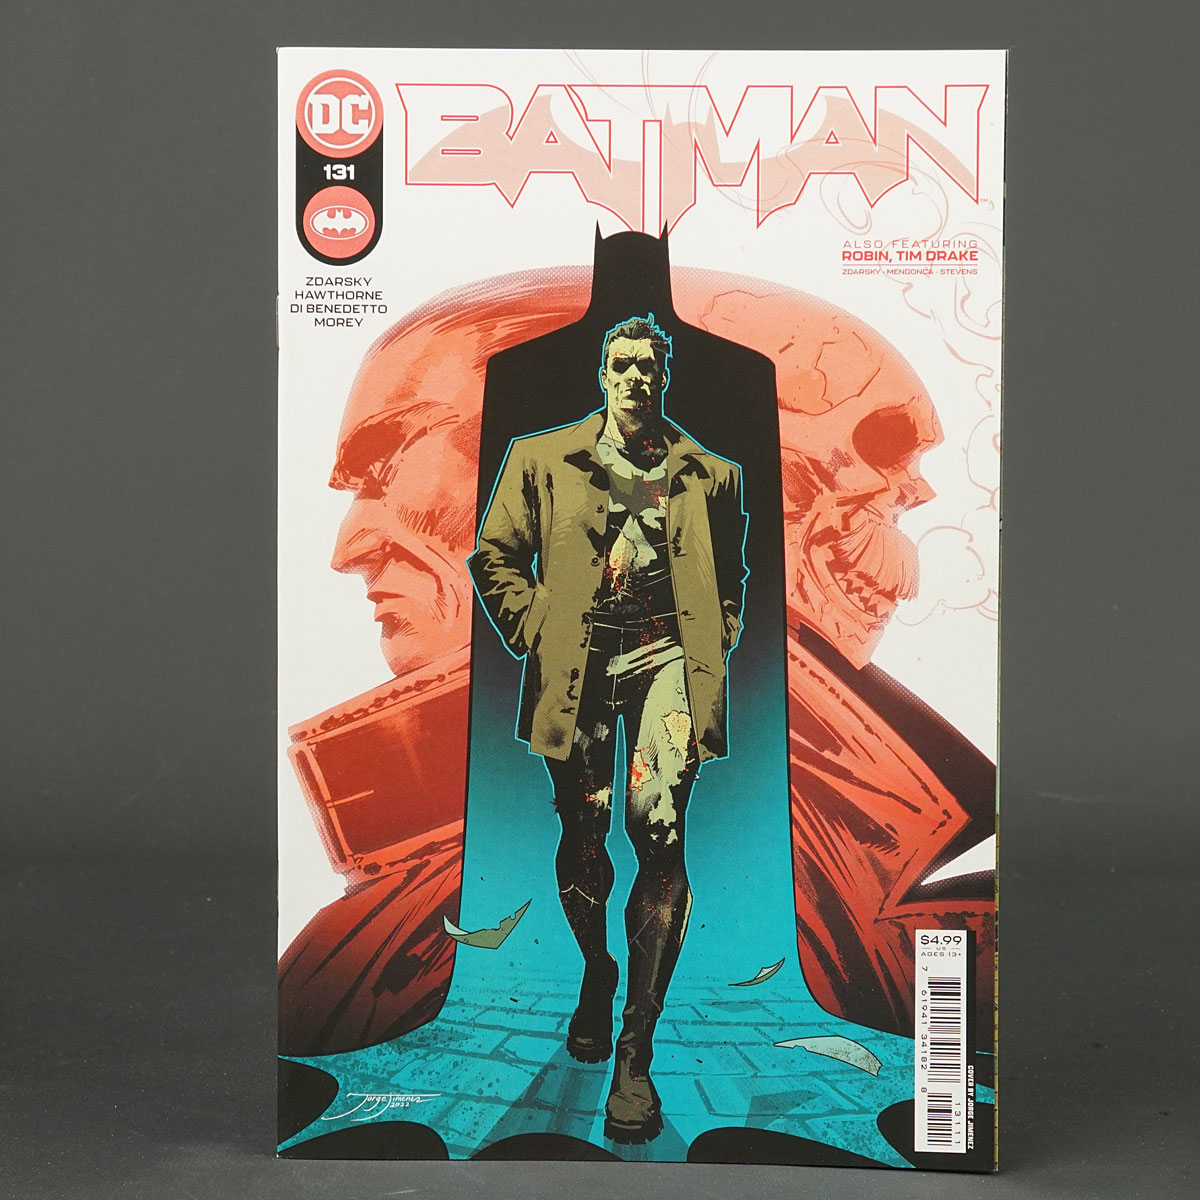 BATMAN #131 Cvr A DC Comics 2023 NOV223375 131A (W) Zdarsky (CA) Jimenez 231117A